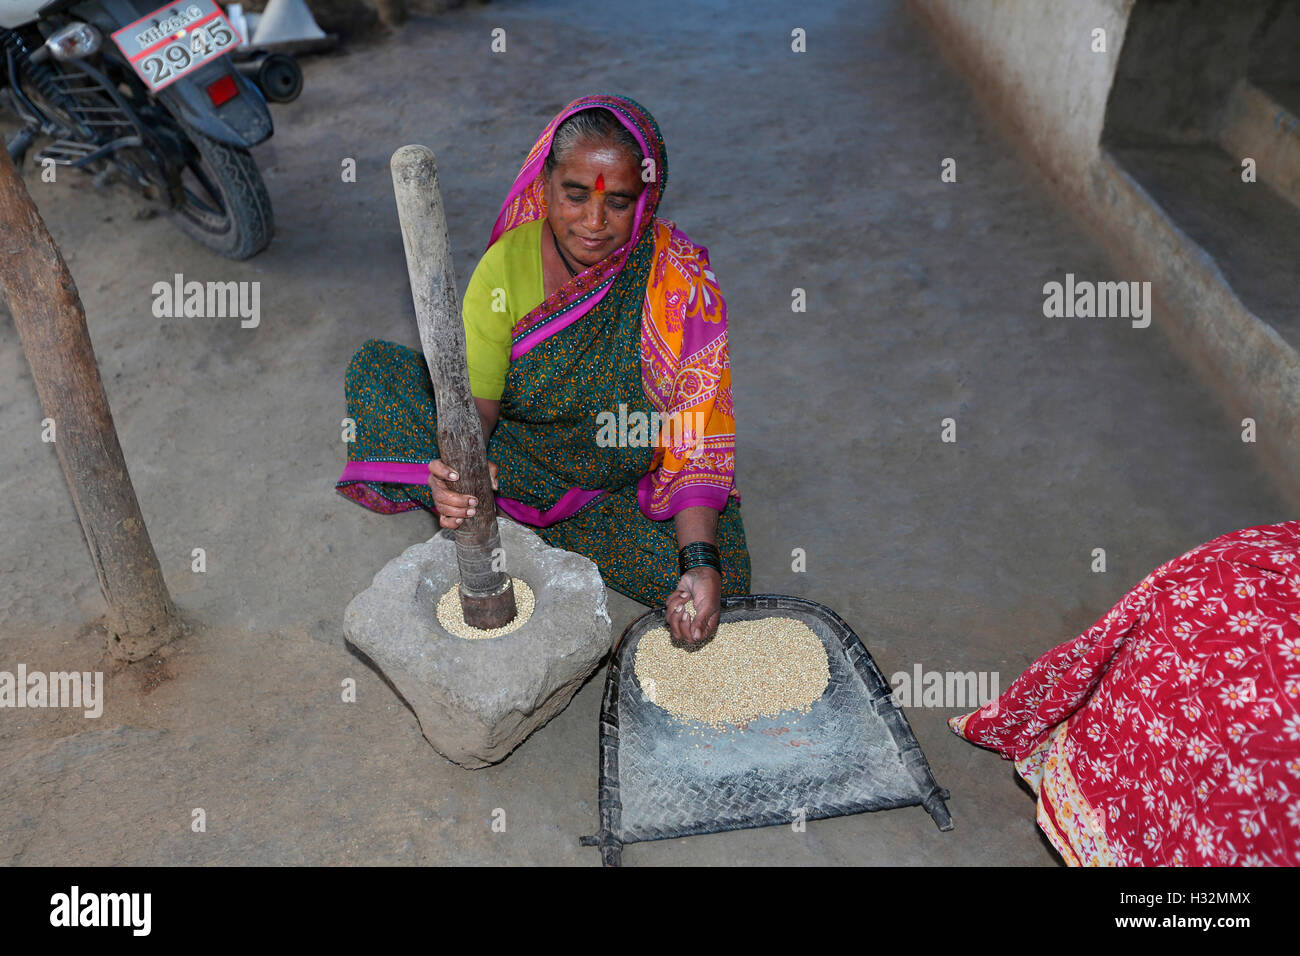 Woman pounding grains. ANDH TRIBE, Injegaon village, Maharashtra, India Stock Photo